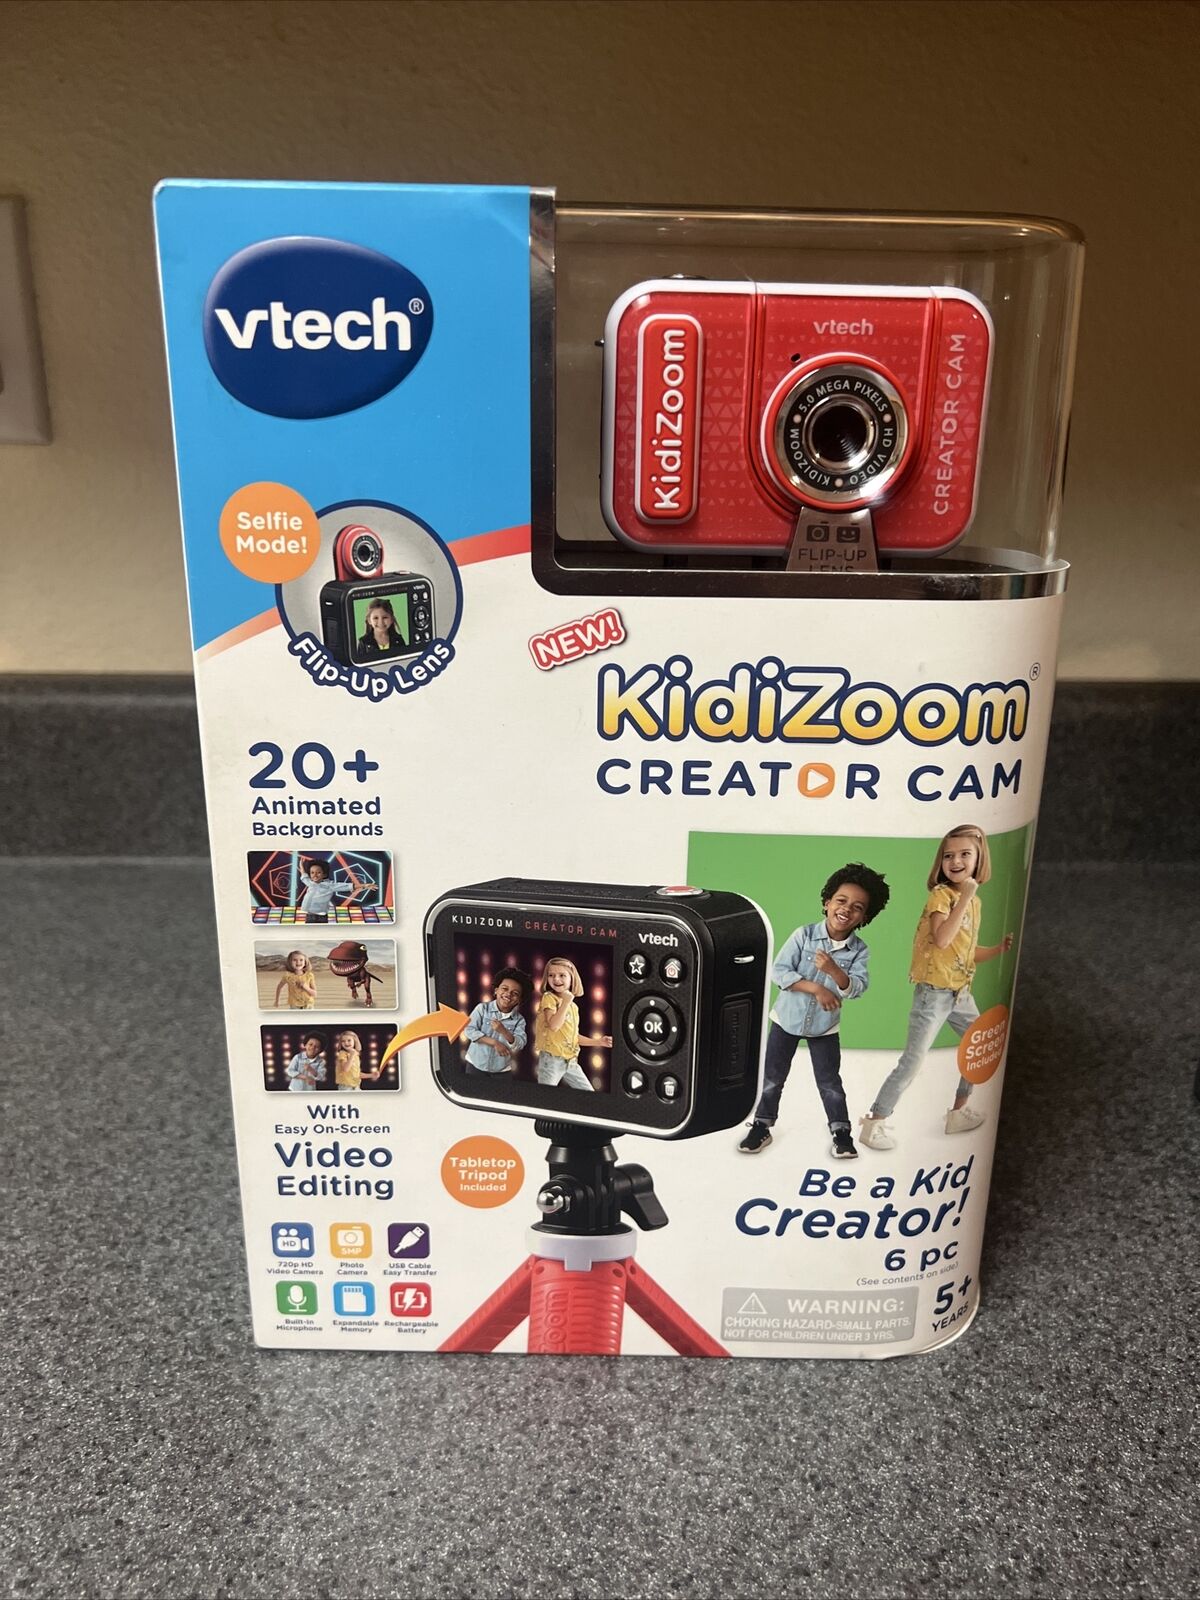 VTech KidiZoom Creator Cam HD Video Kids' Digital Camera Green Screen - NEW